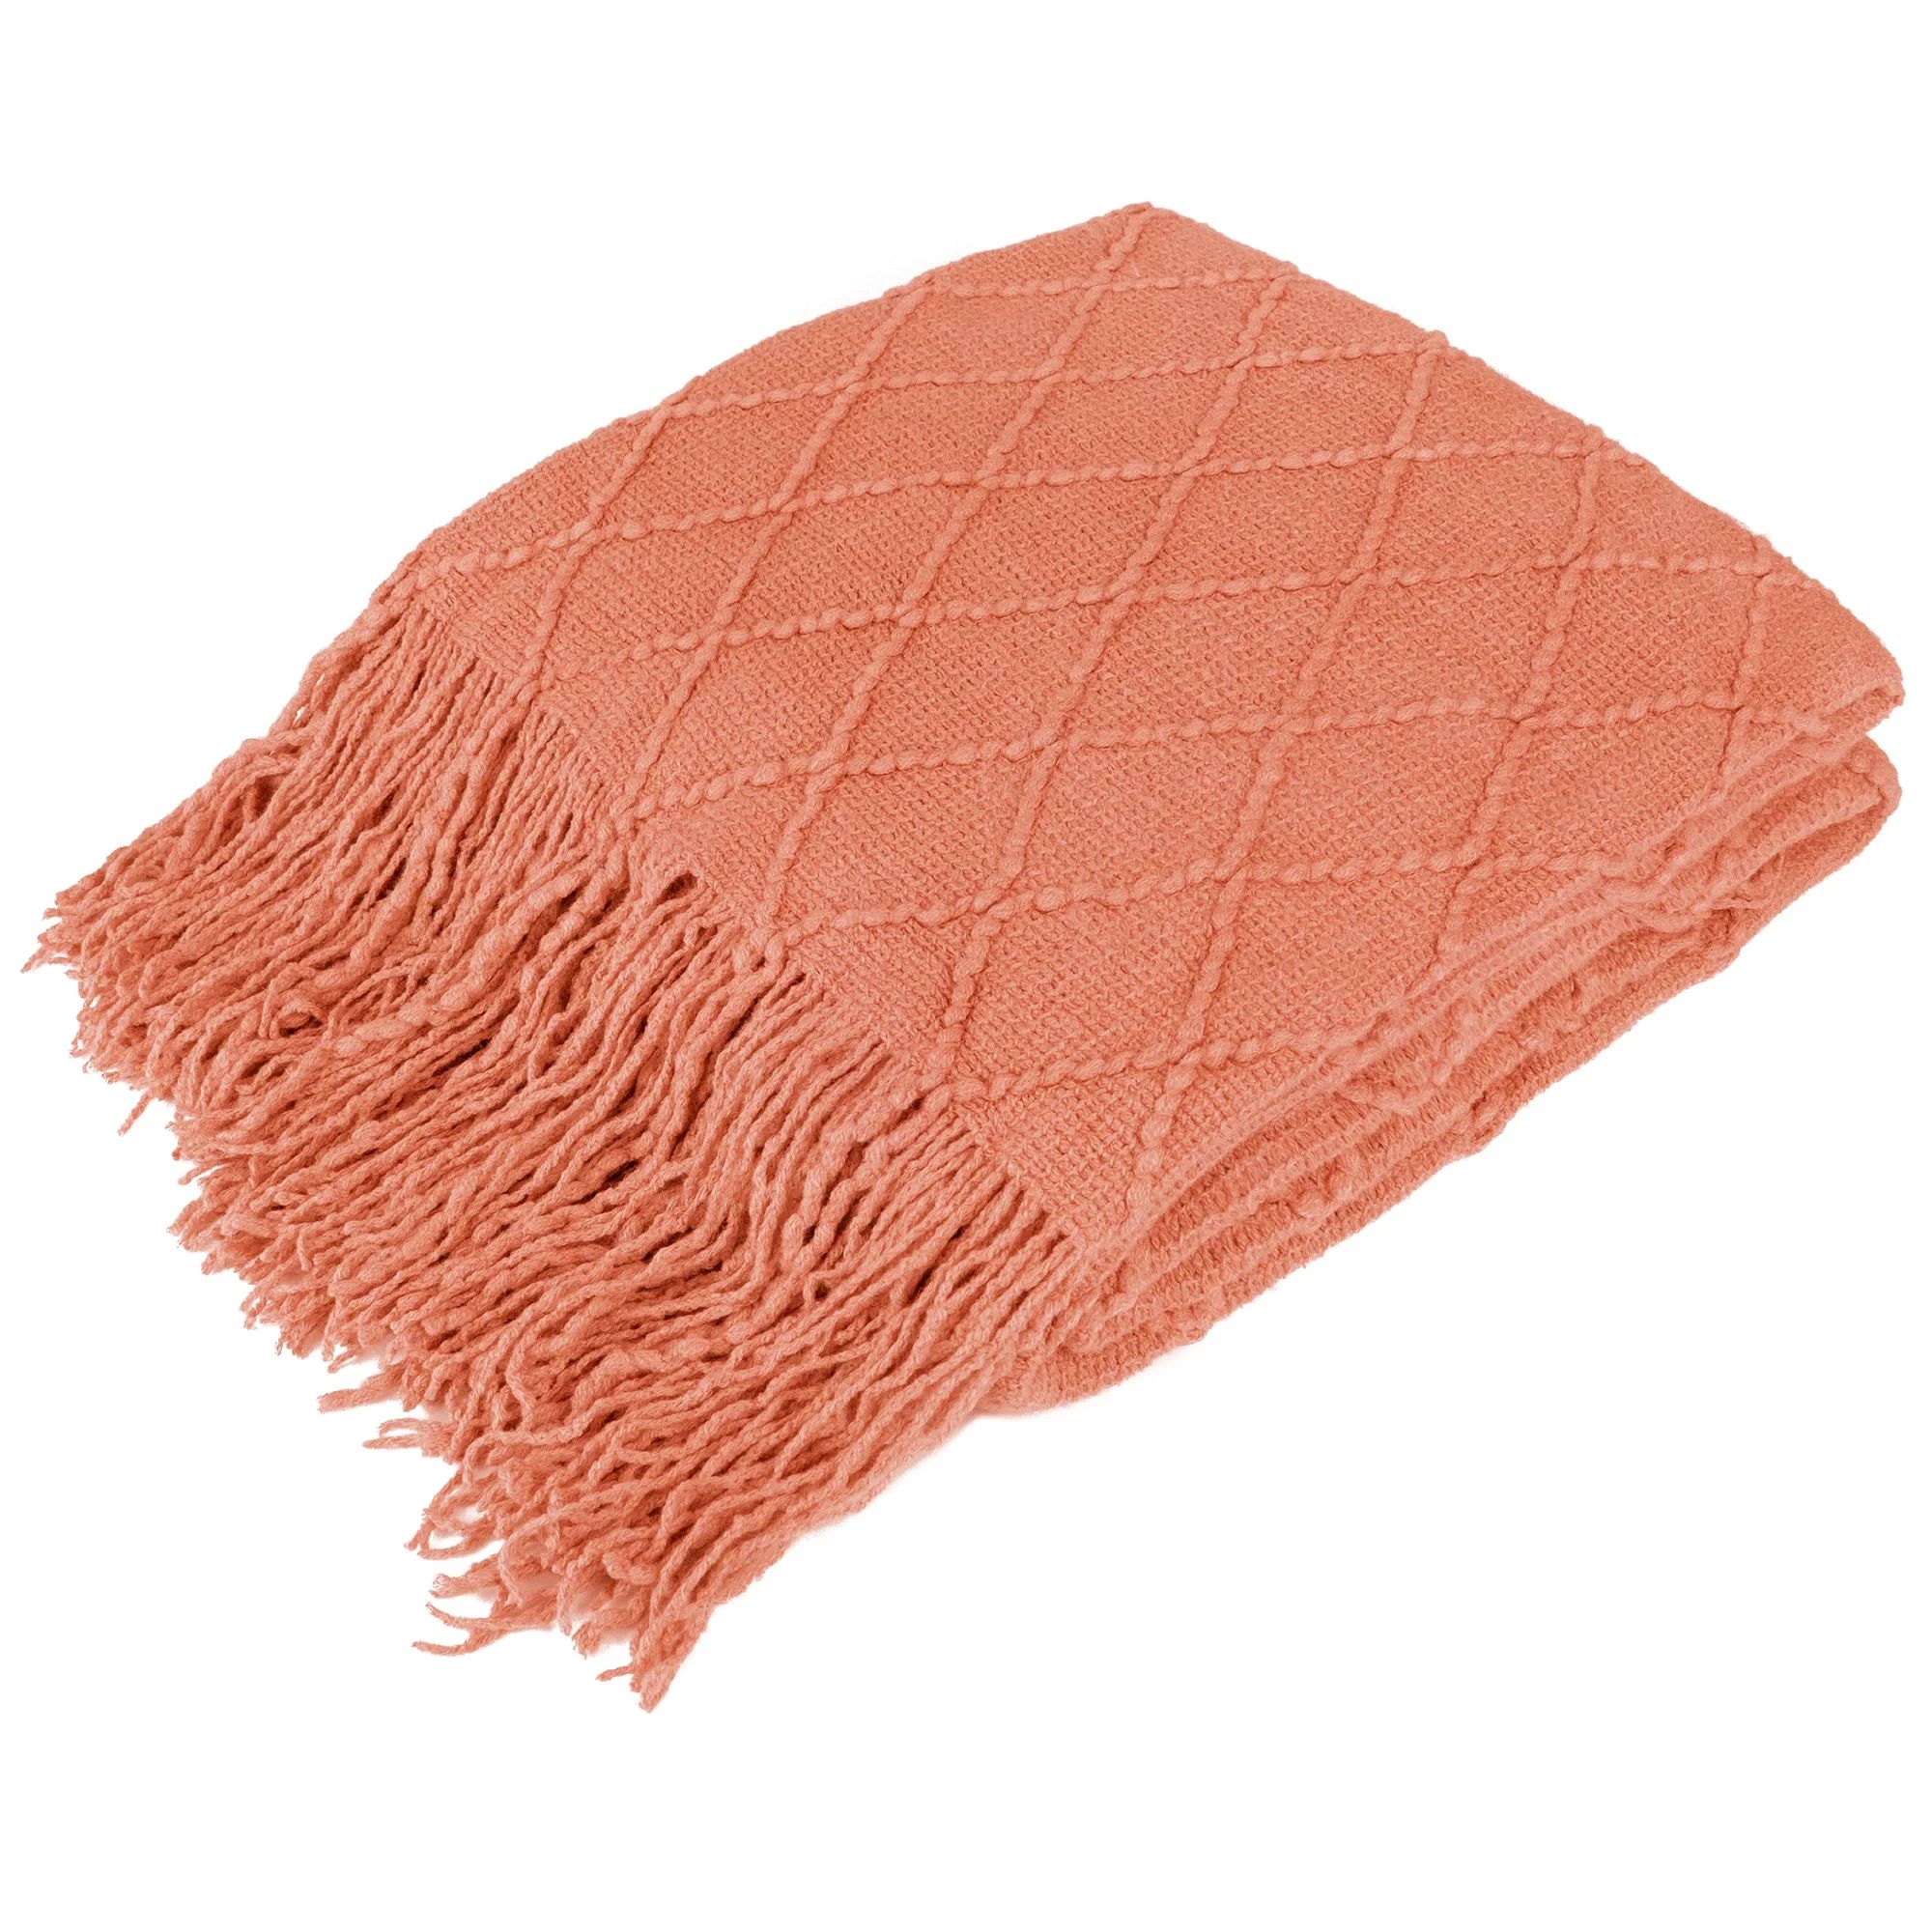 PAVILIA Knitted Throw Blanket Fringe Coral Orange Peach Salmon | Decorative Tassel Boho Farmhouse... | Walmart (US)